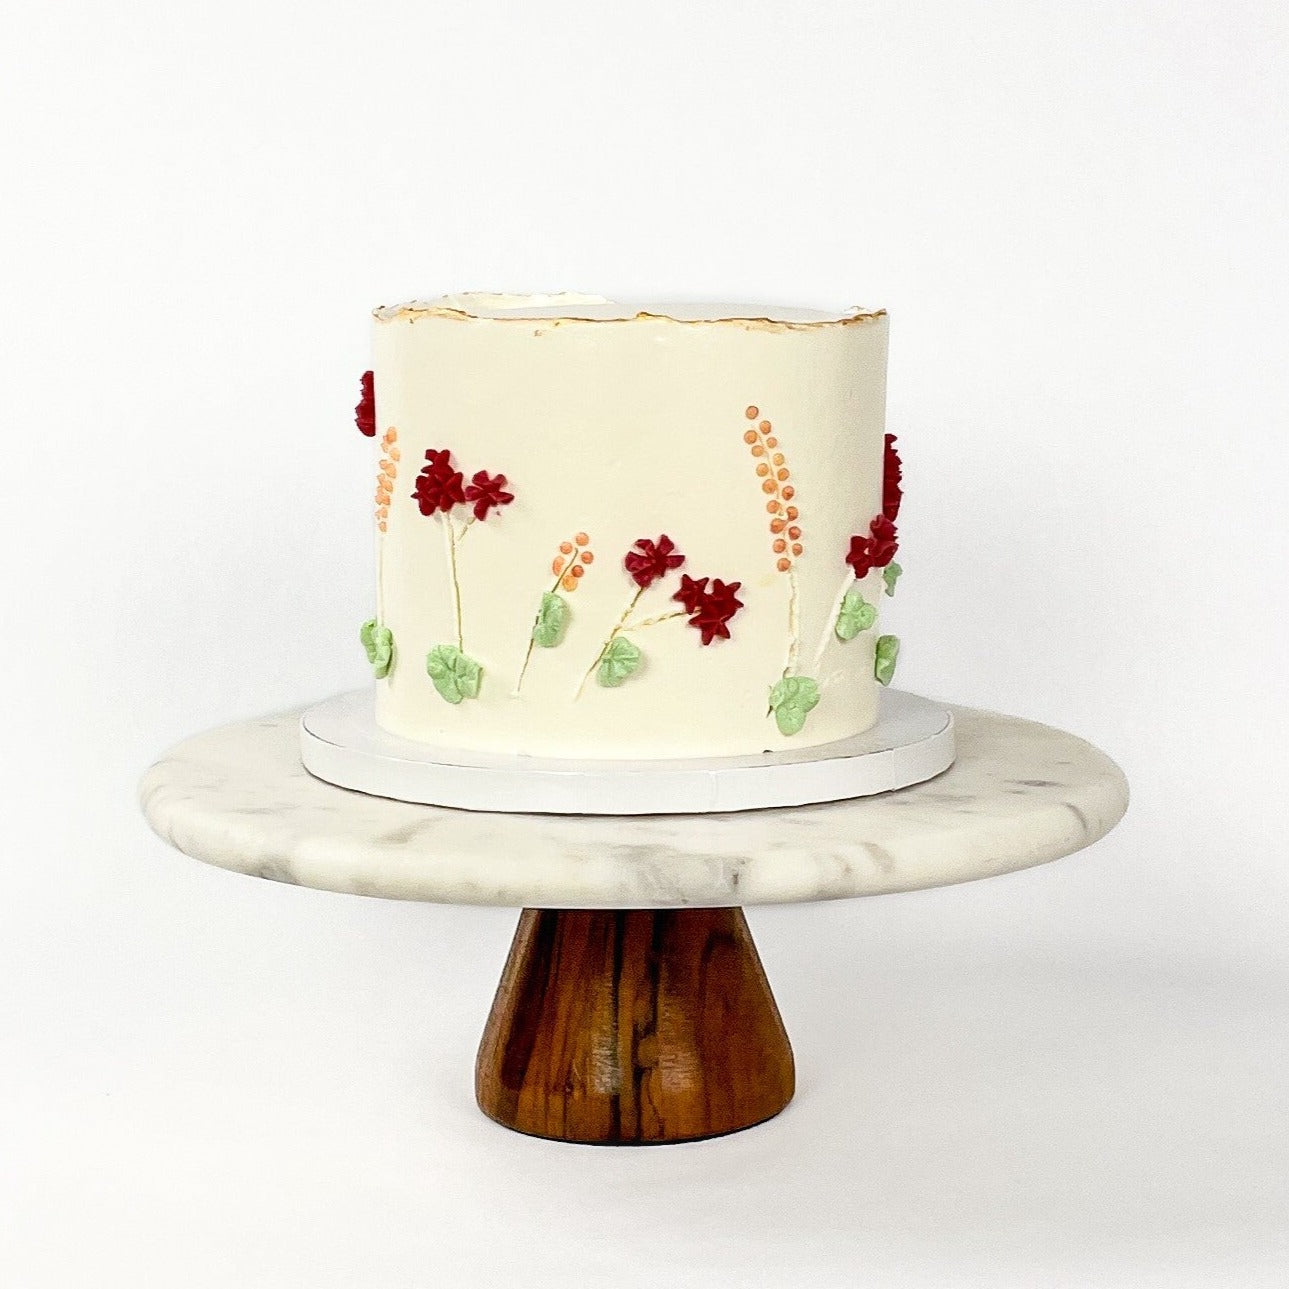 21 Modern Birthday Cakes For Girls & Ladies